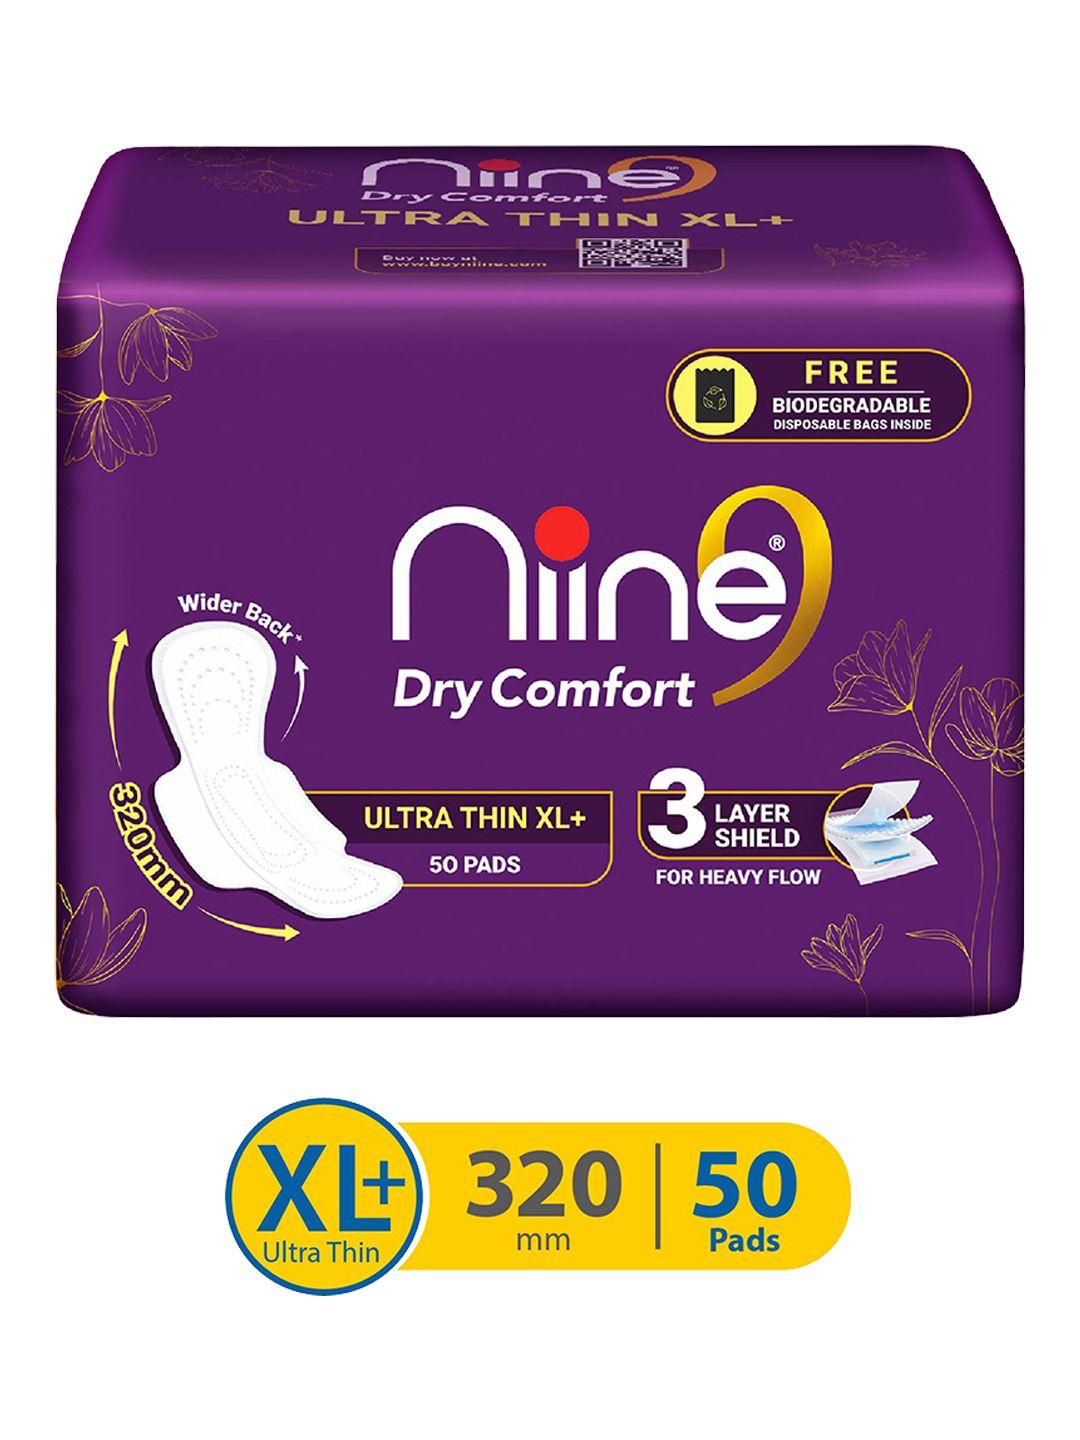 niine dry comfort ultra-thin xl+ 320mm sanitary napkins for heavy flow - 50 pads